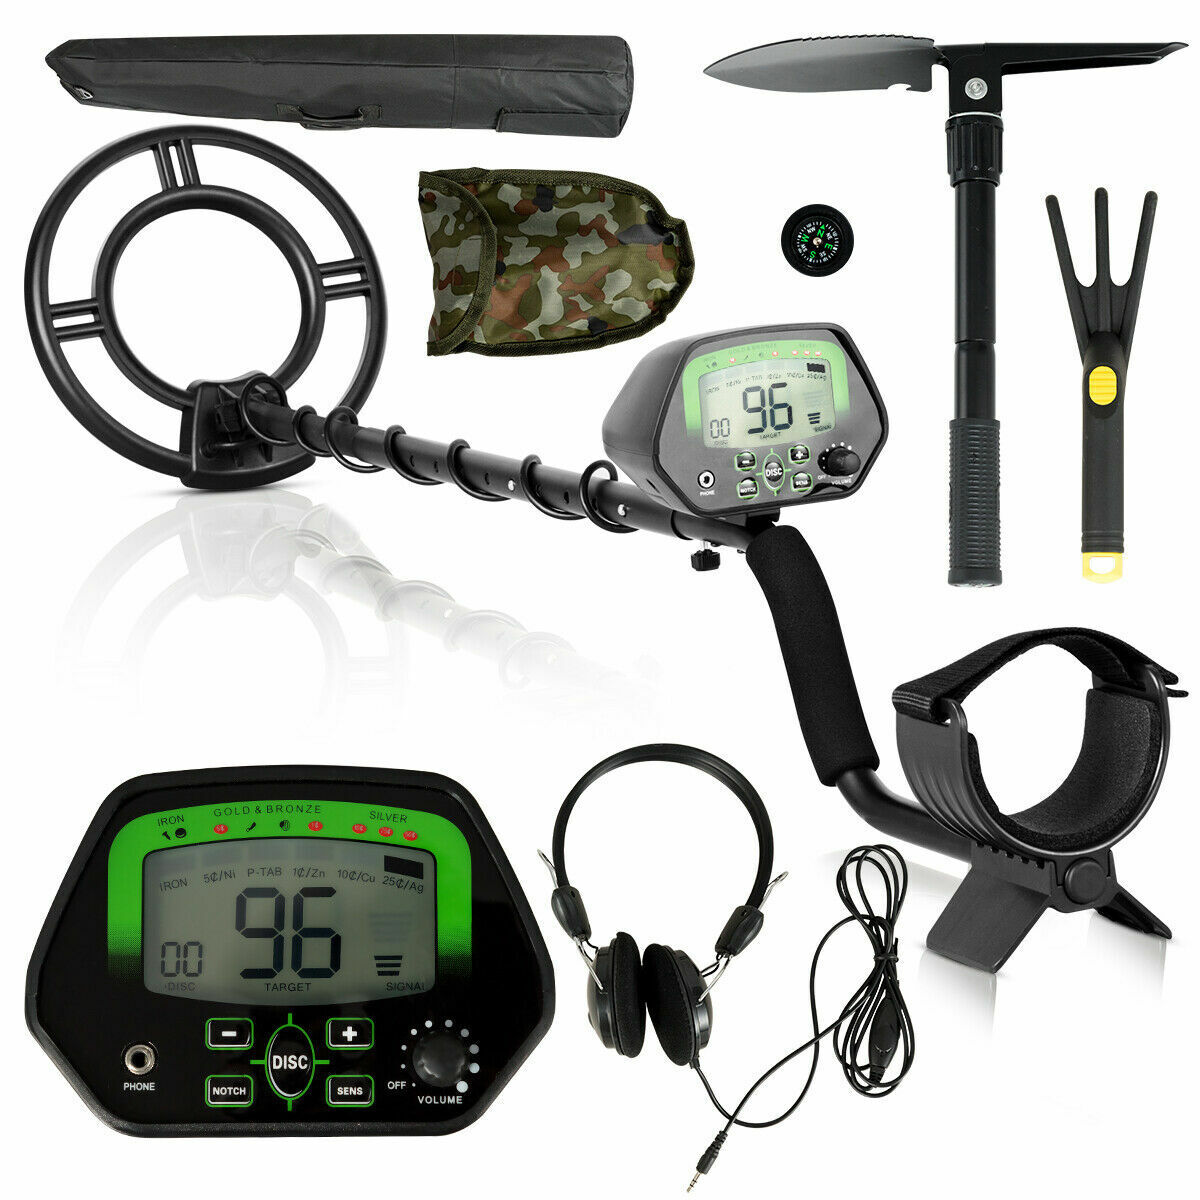 High Accuracy Metal Detector Kit W/Display Waterproof Search Coil Headphone Bag